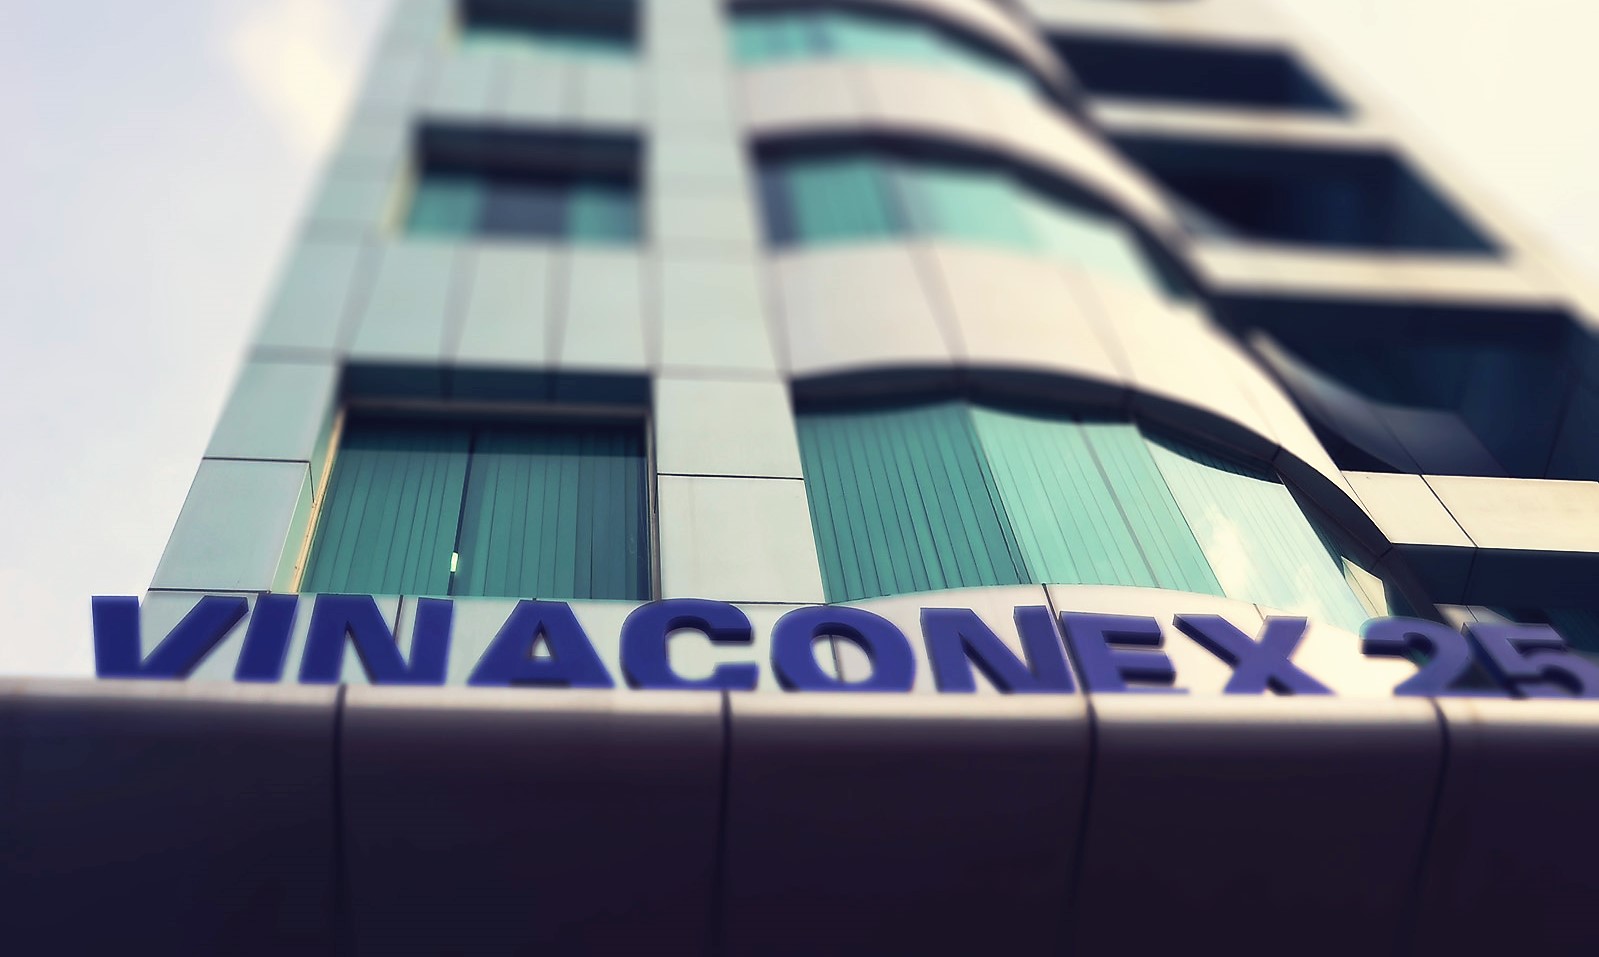 Vinaconex 25 bị truy thu gần 2,9 tỷ đồng do khai sai thuế